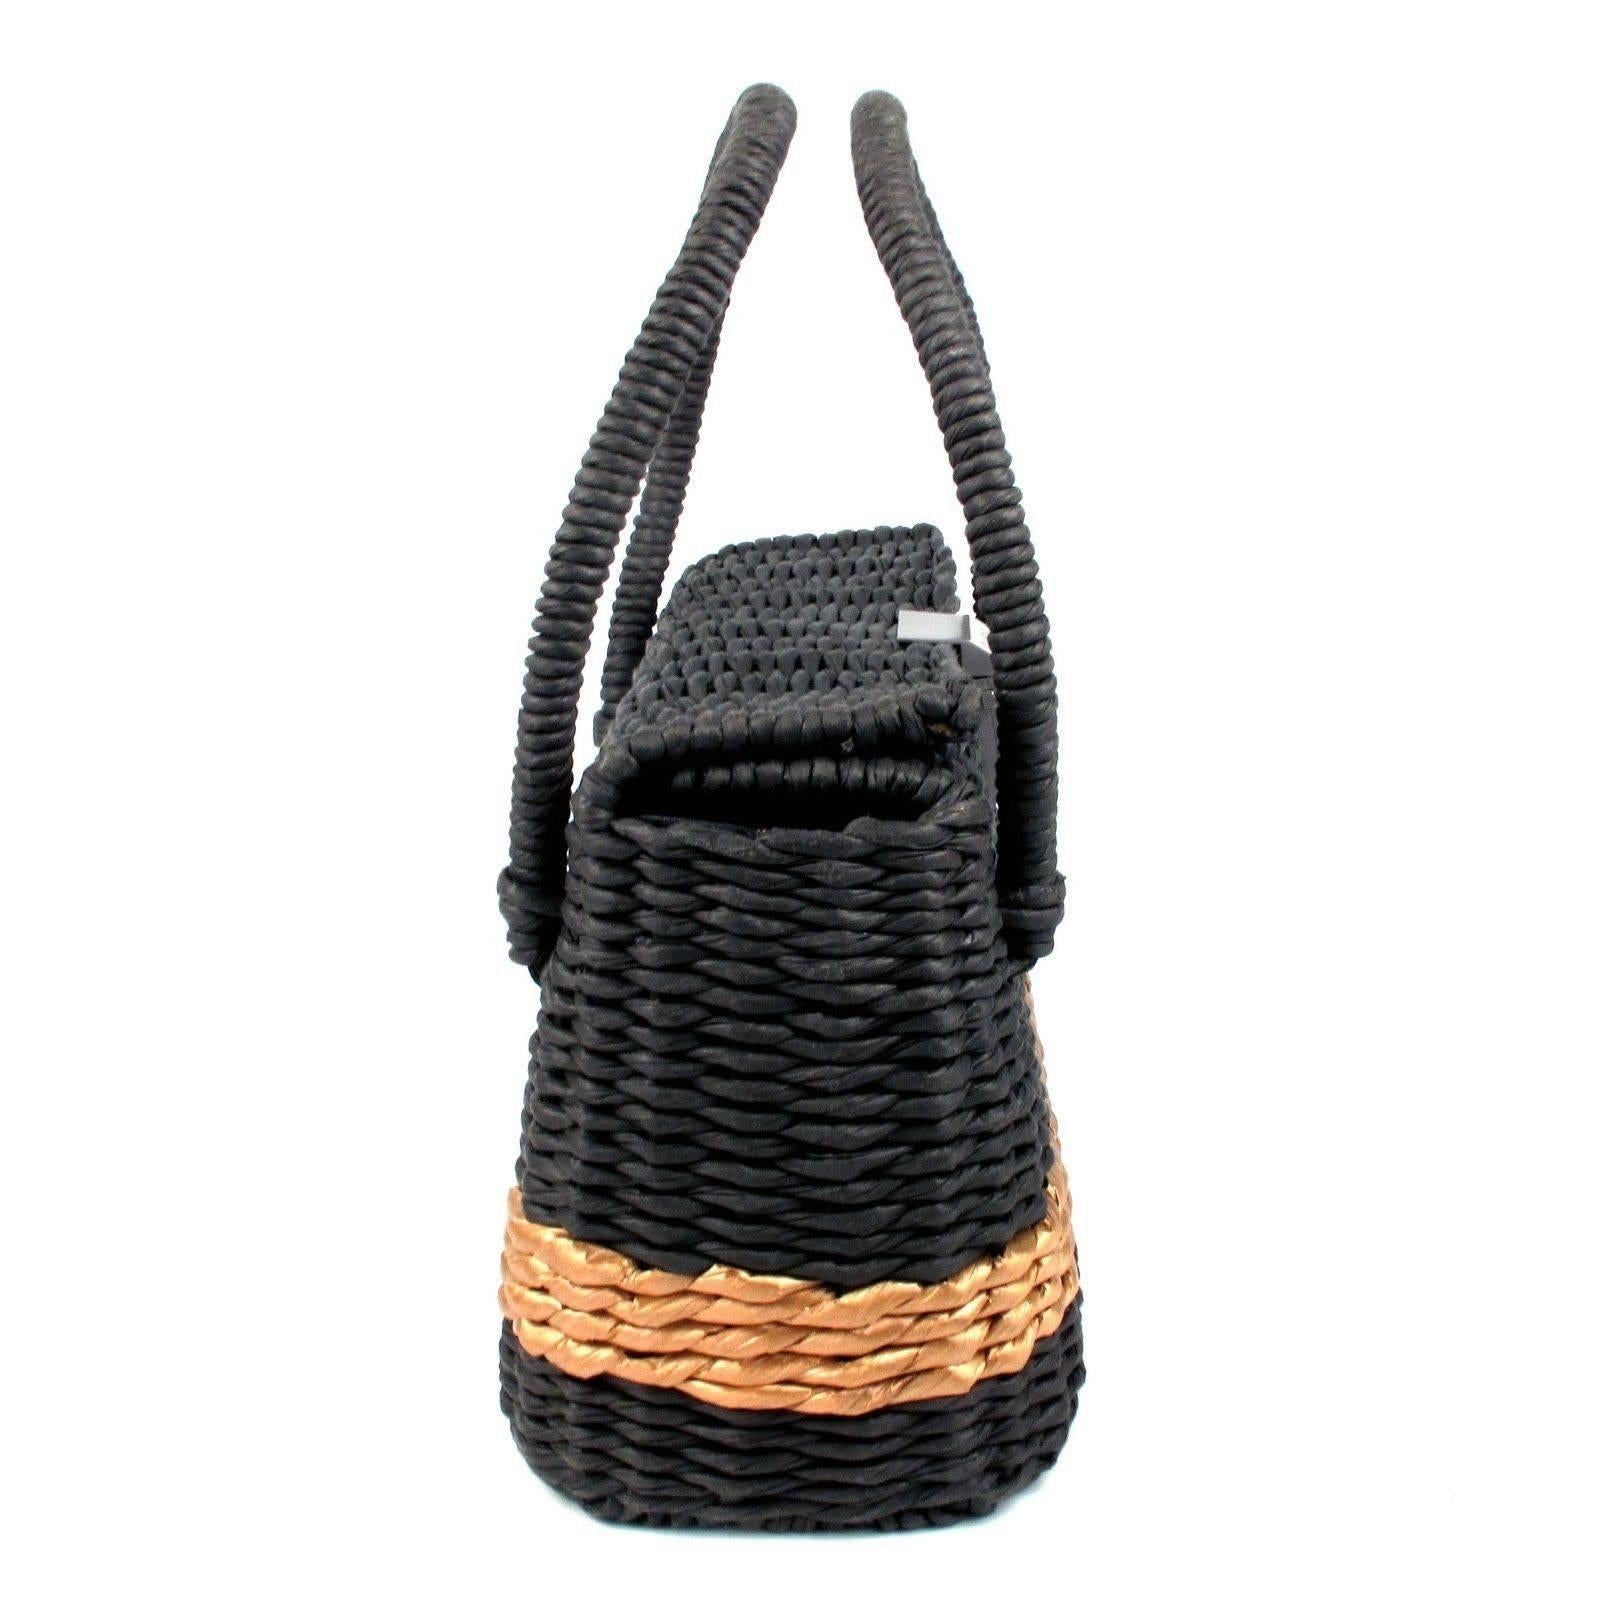 Women's Chanel Straw Bag - Rare Basket Woven Raffia Tote Bag Gray Tan Black Leather CC